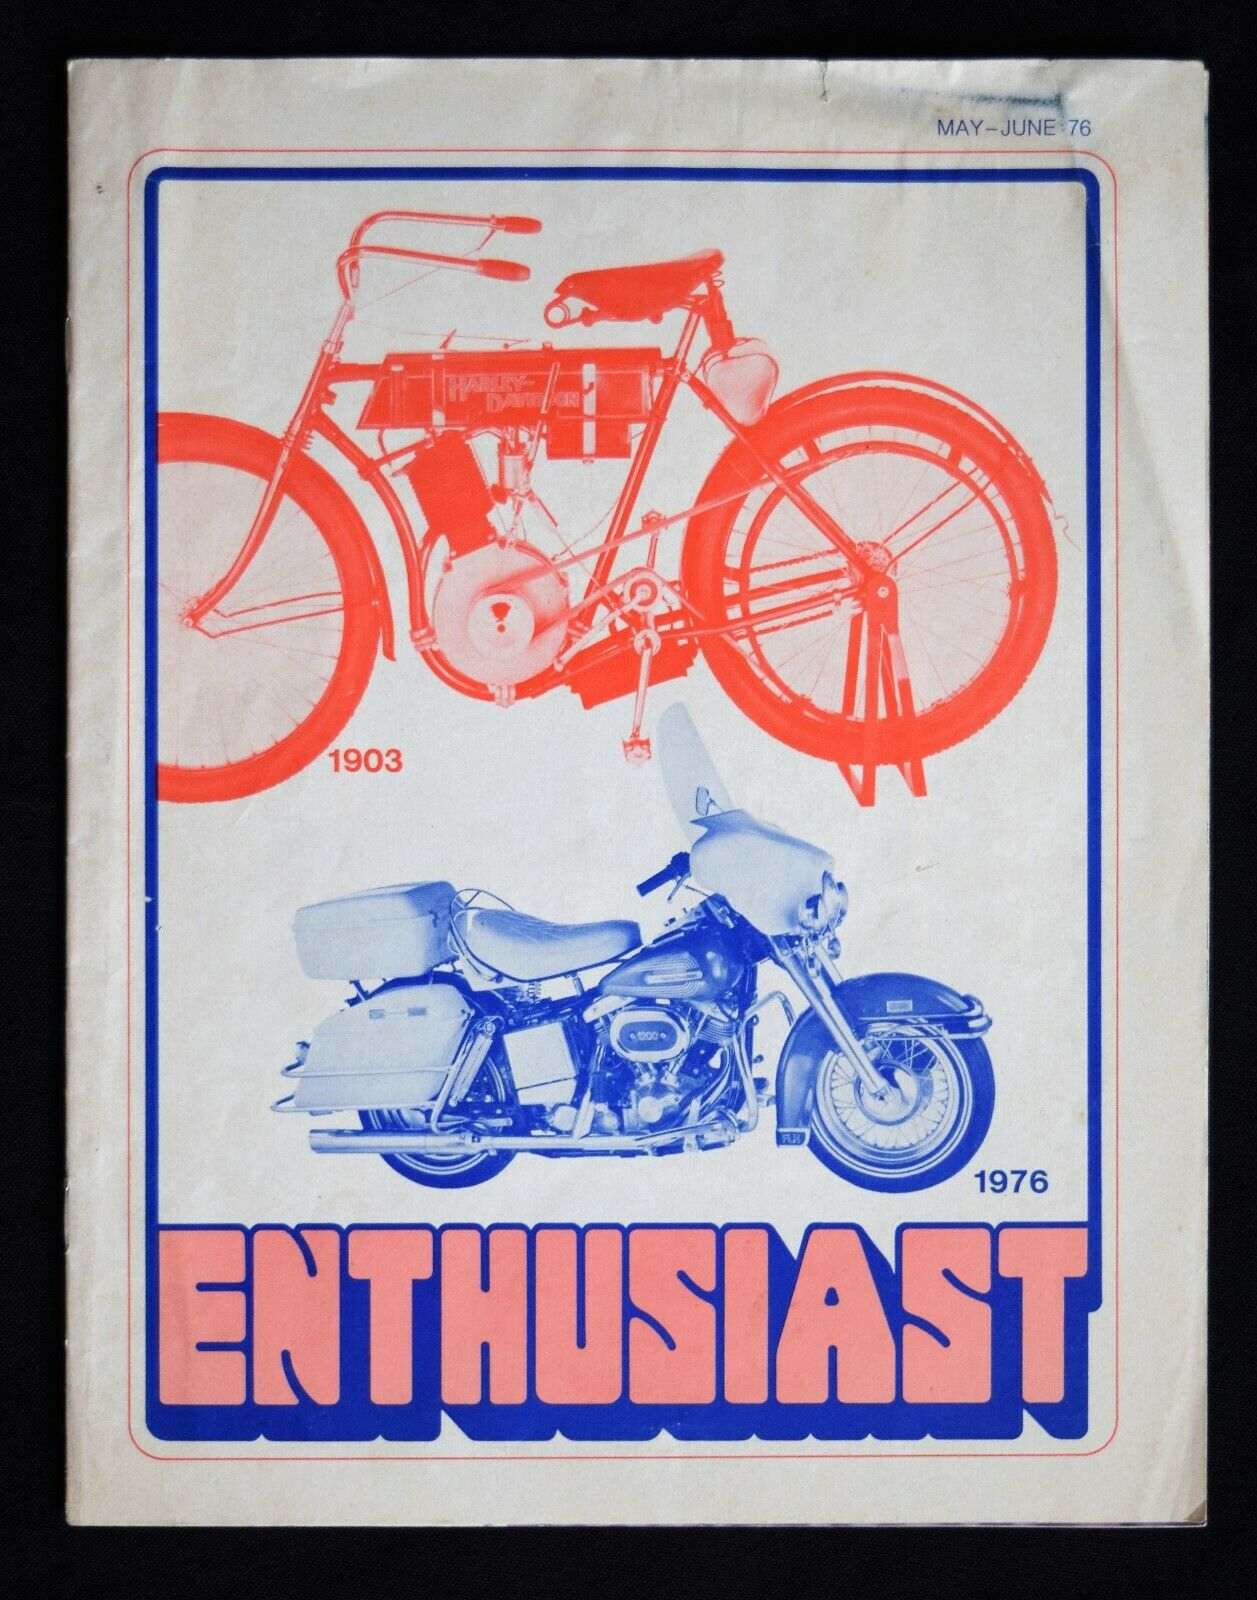 Amf Harley-davidson Enthusiast Magazine - May / June 1976